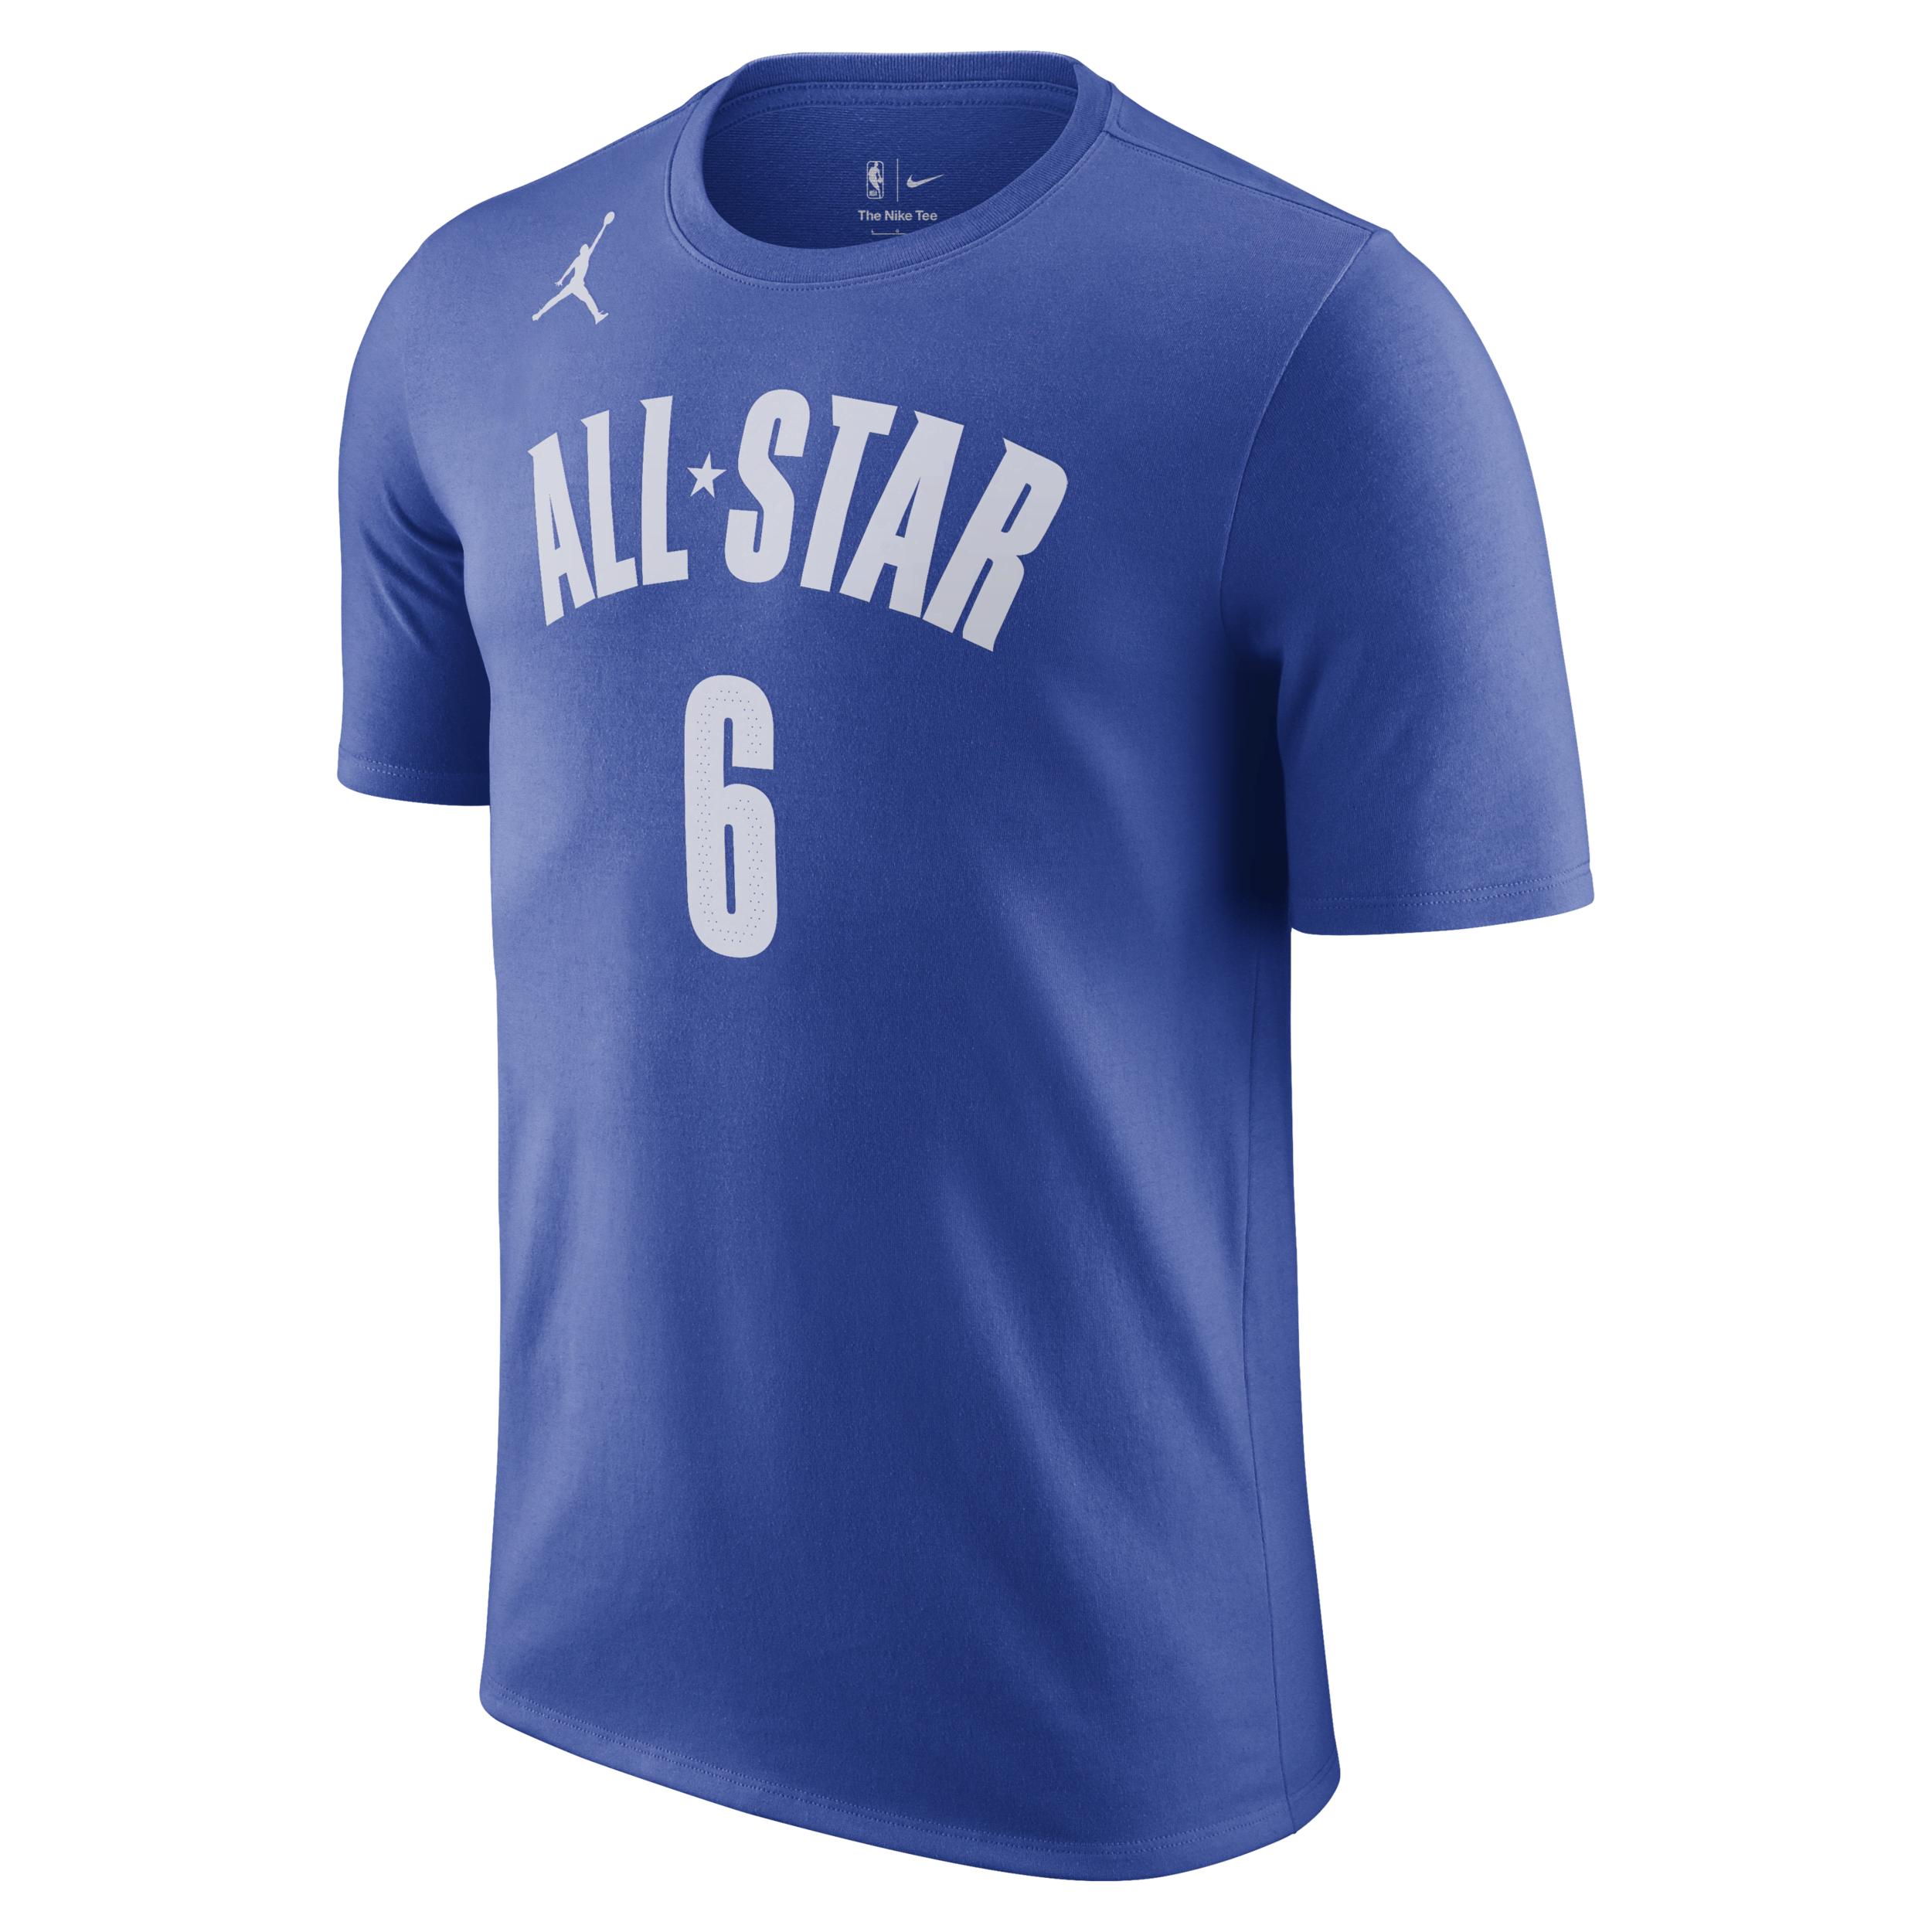 White Nike NBA LA Lakers James #23 T-Shirt - JD Sports Ireland